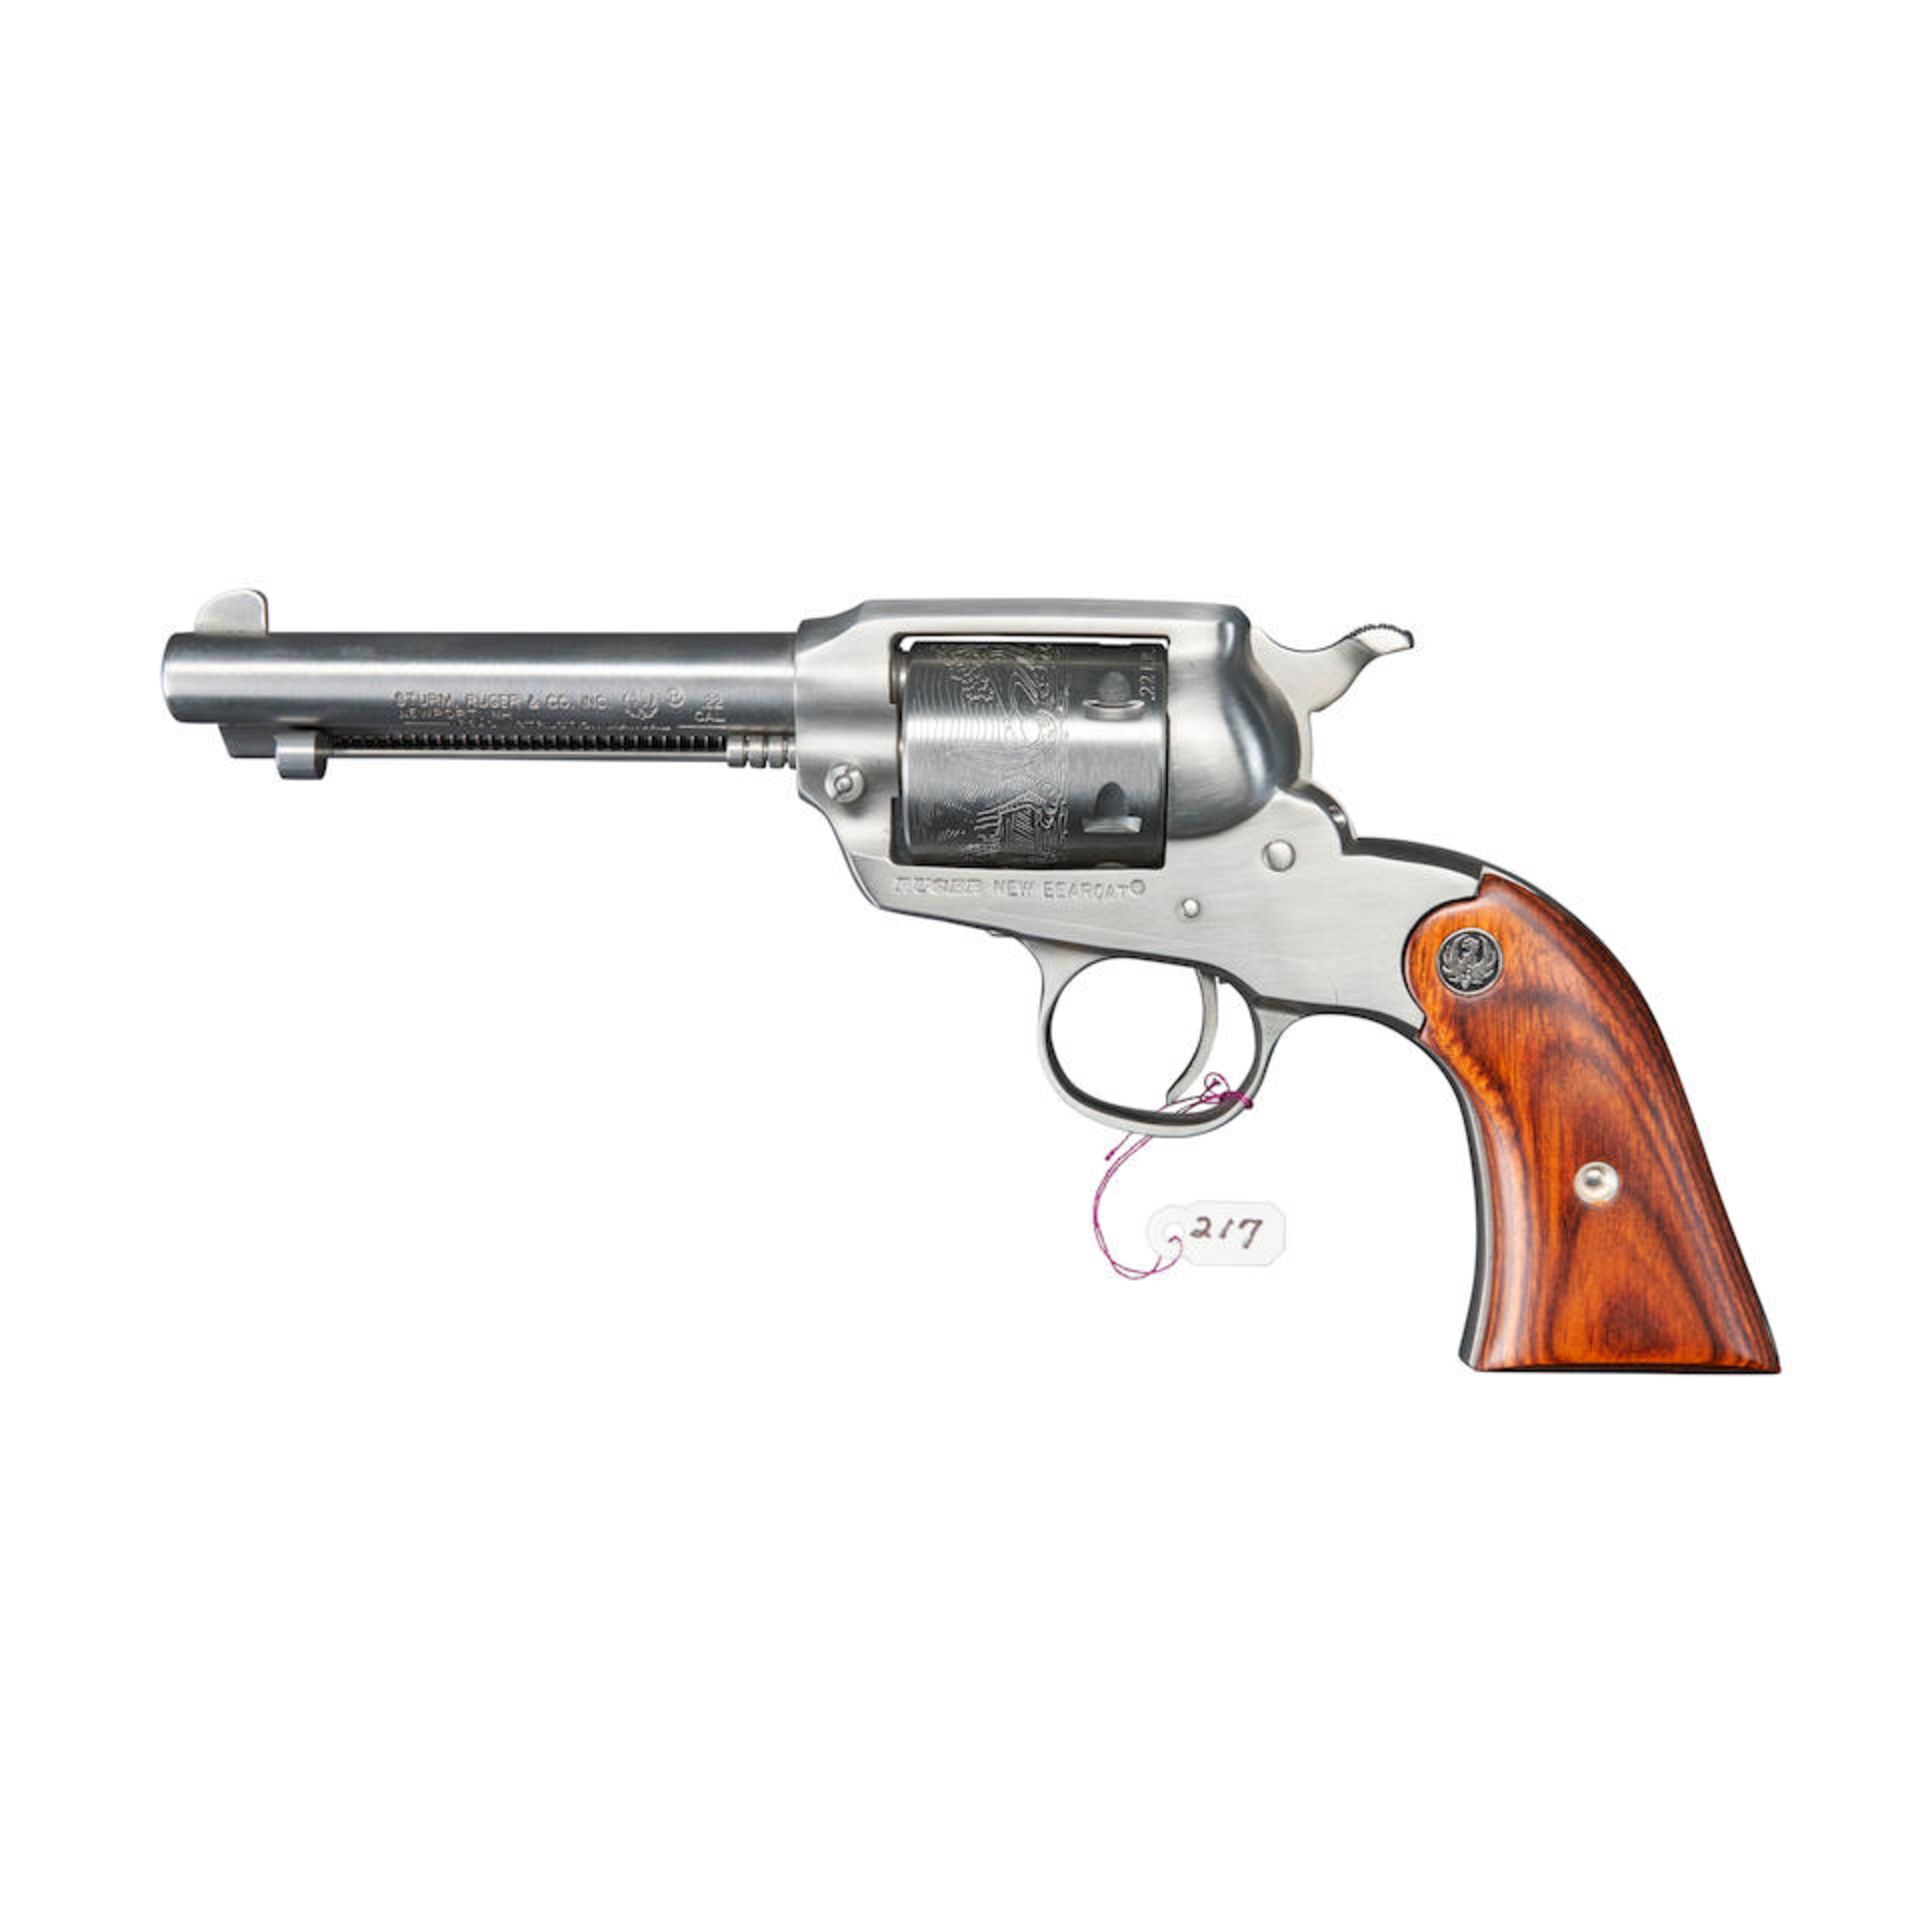 Ruger New Bearcat Stainless Steel Single Action Revolver, Modern handgun - Image 3 of 4